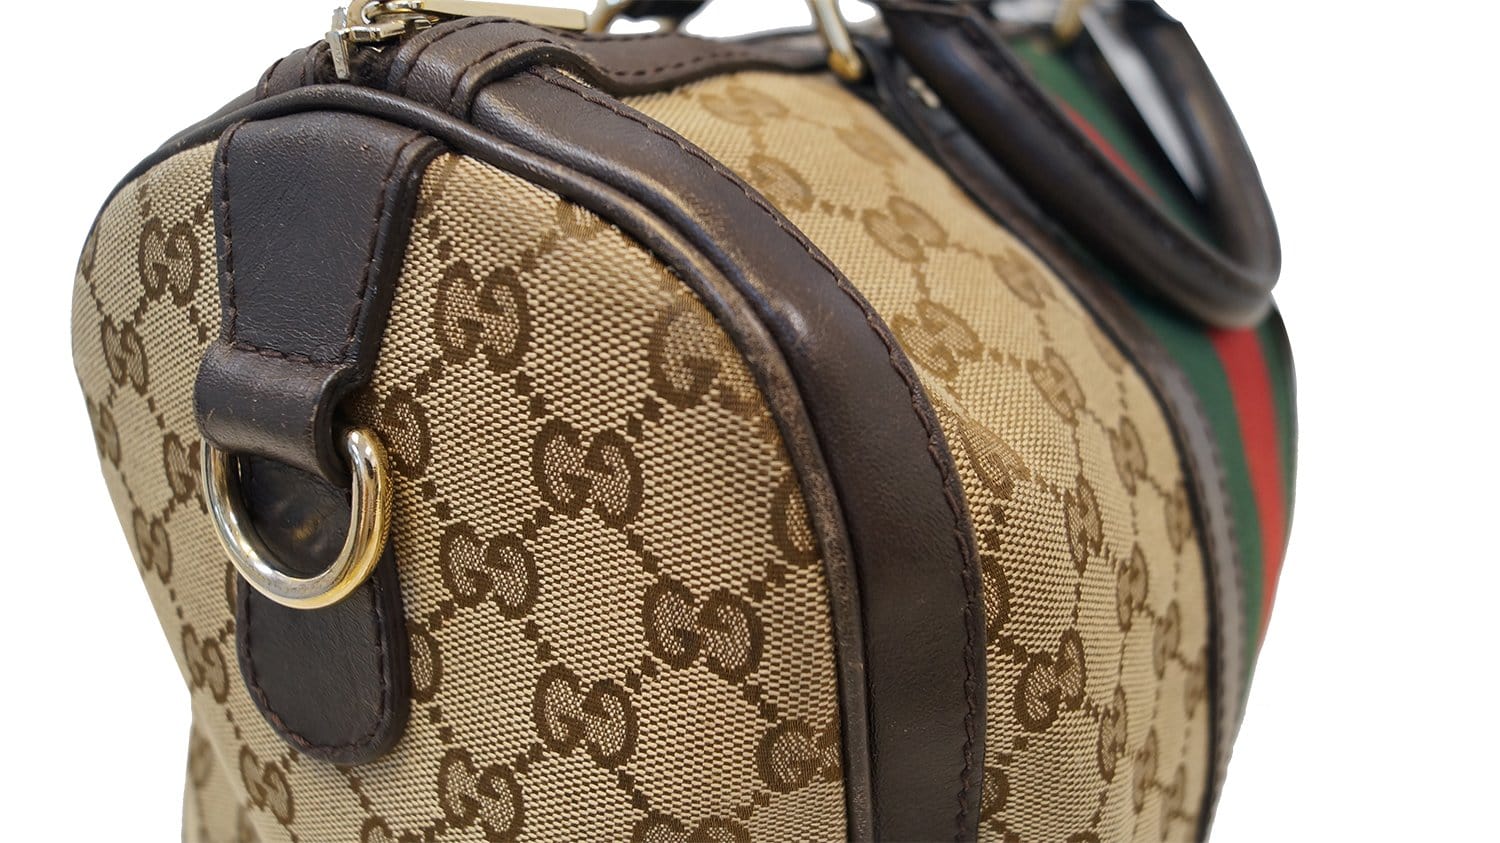 Gucci Vintage Web Medium Boston Bag in Brown